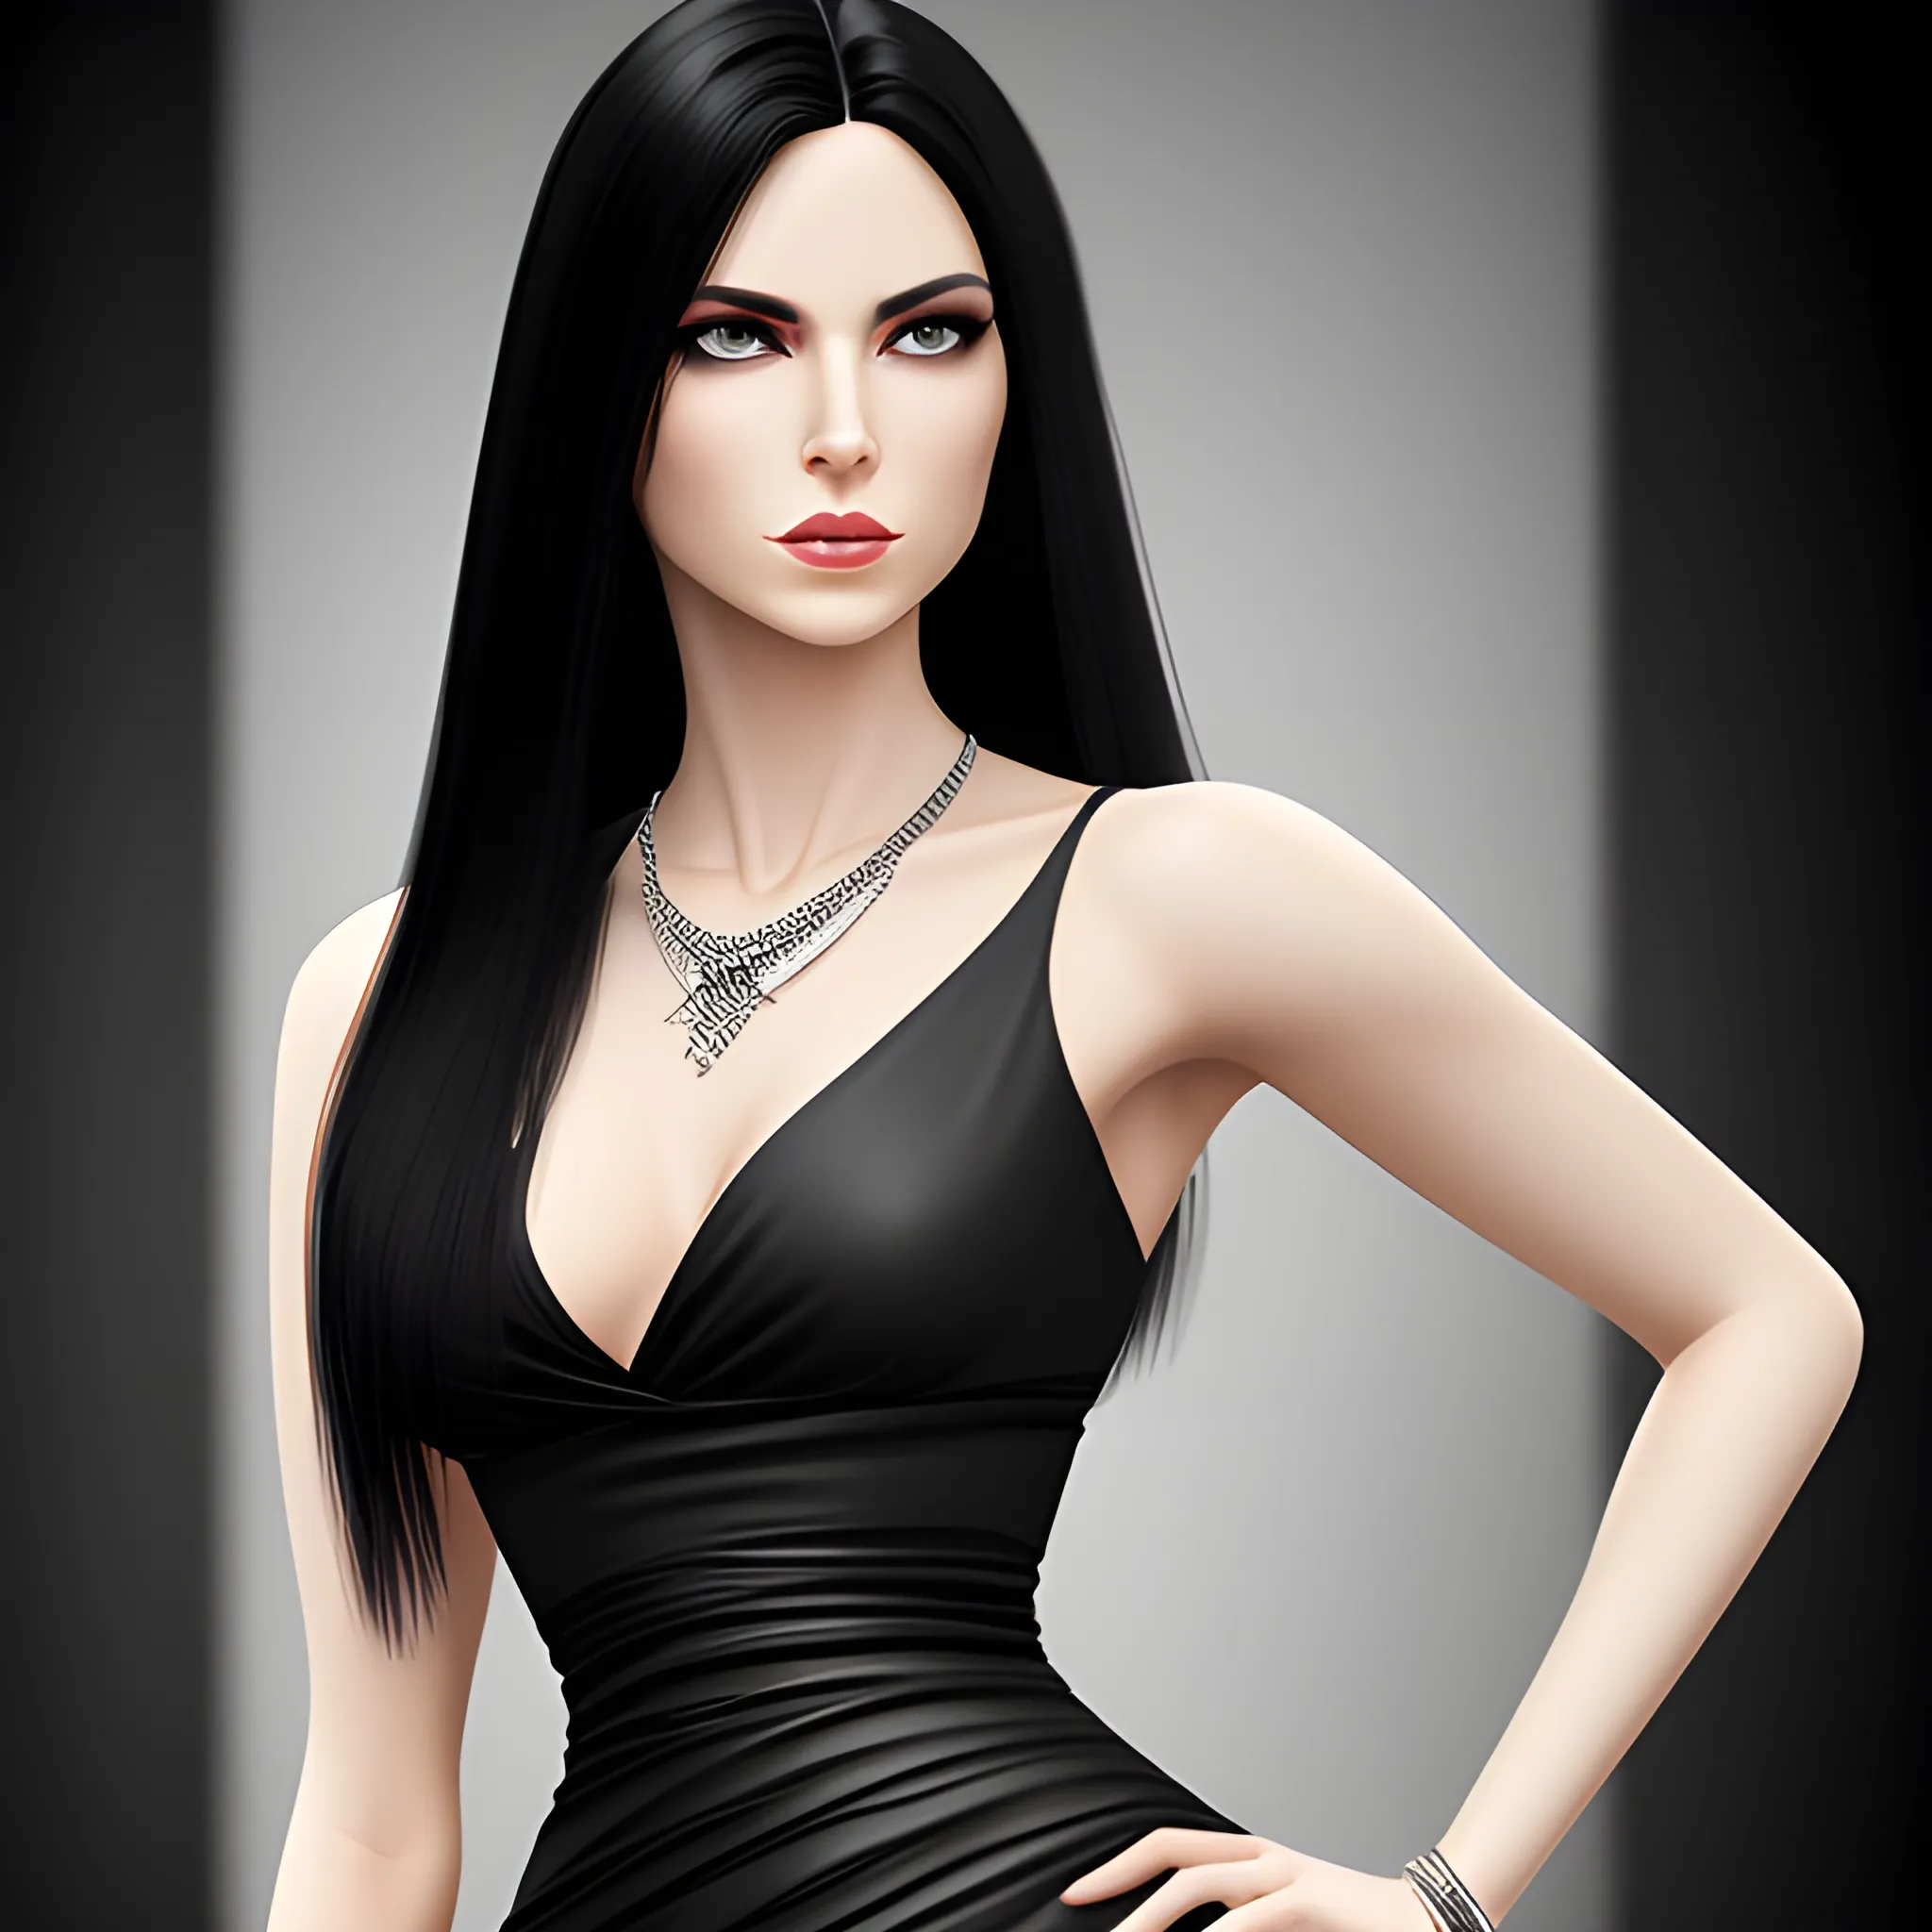 woman, black straight hair, six pack, wide hips, black elegant dress, black heels, silver bangles, silver necklace, photorealistic